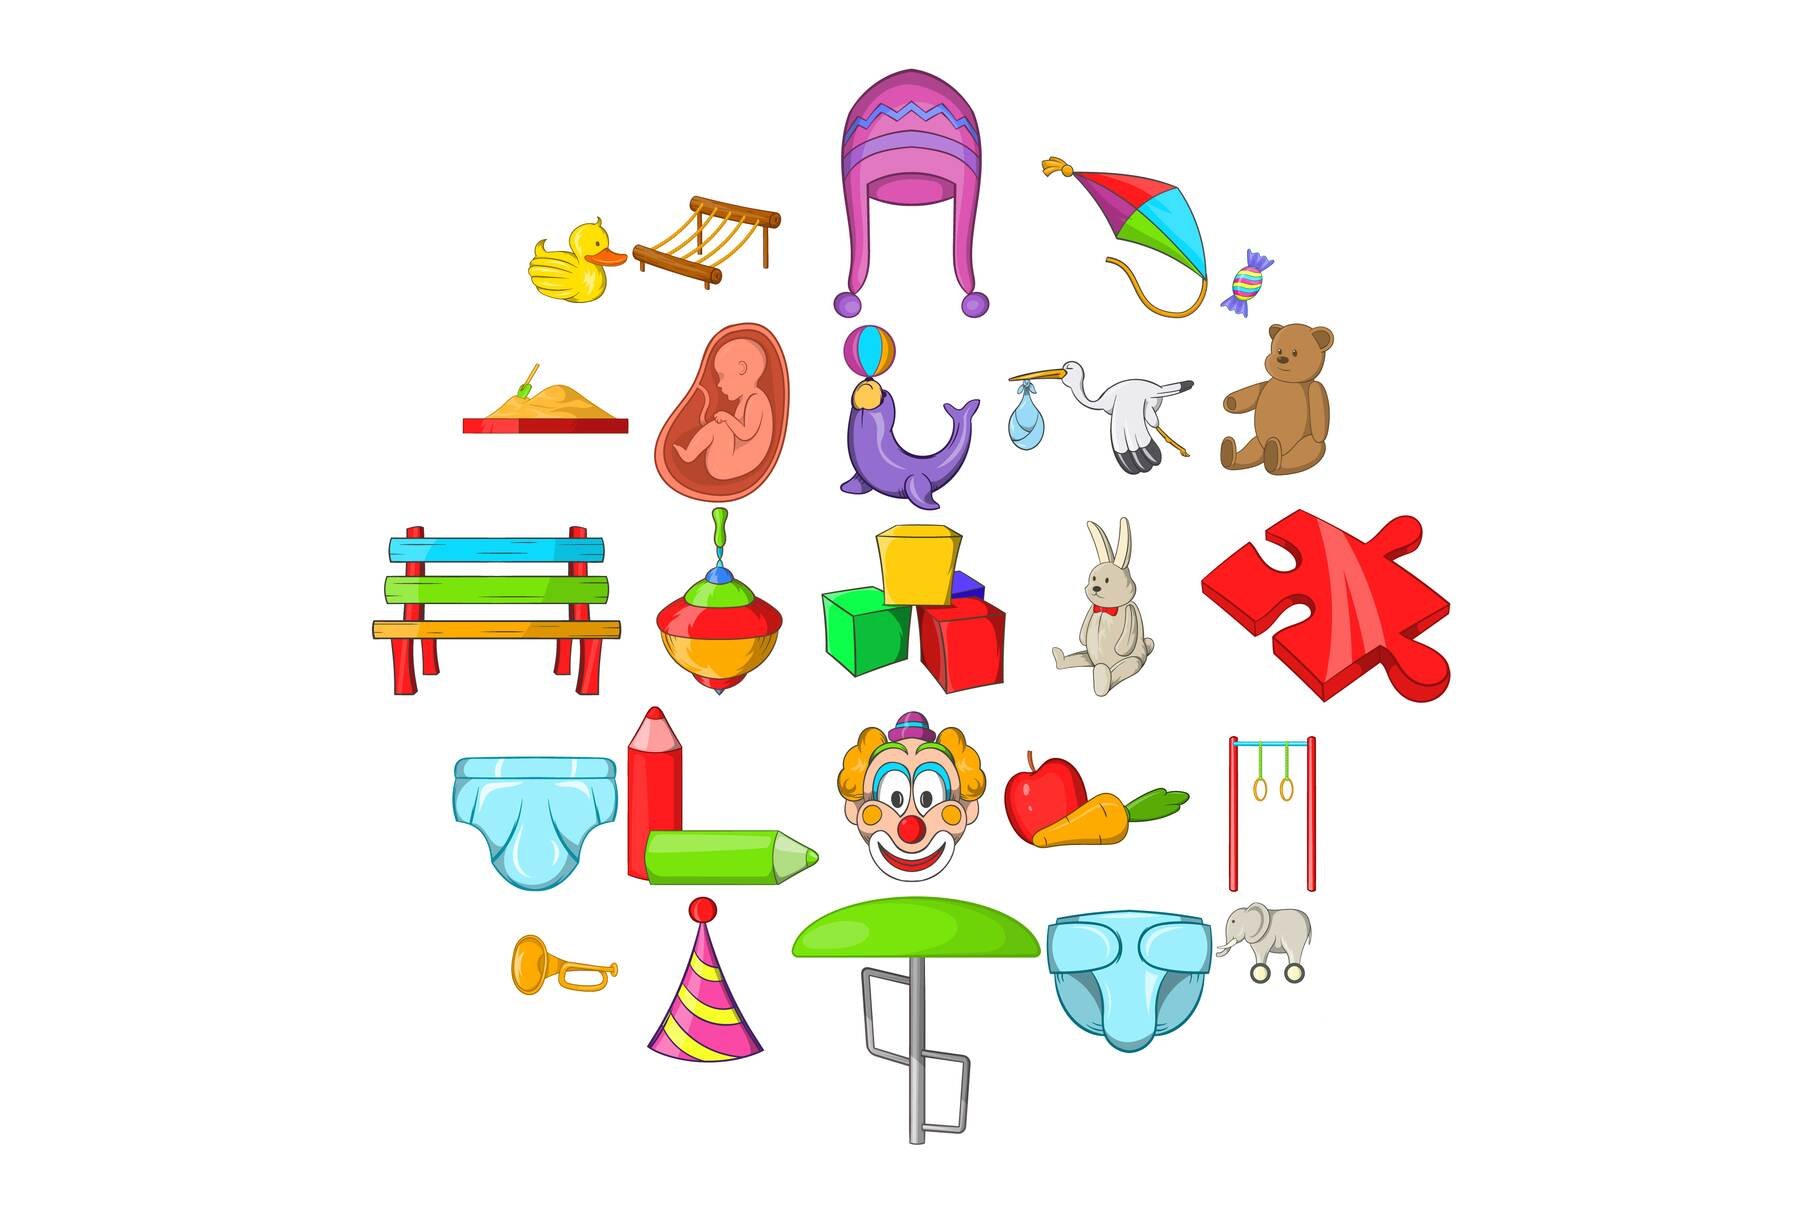 Infant icons set, cartoon style cover image.